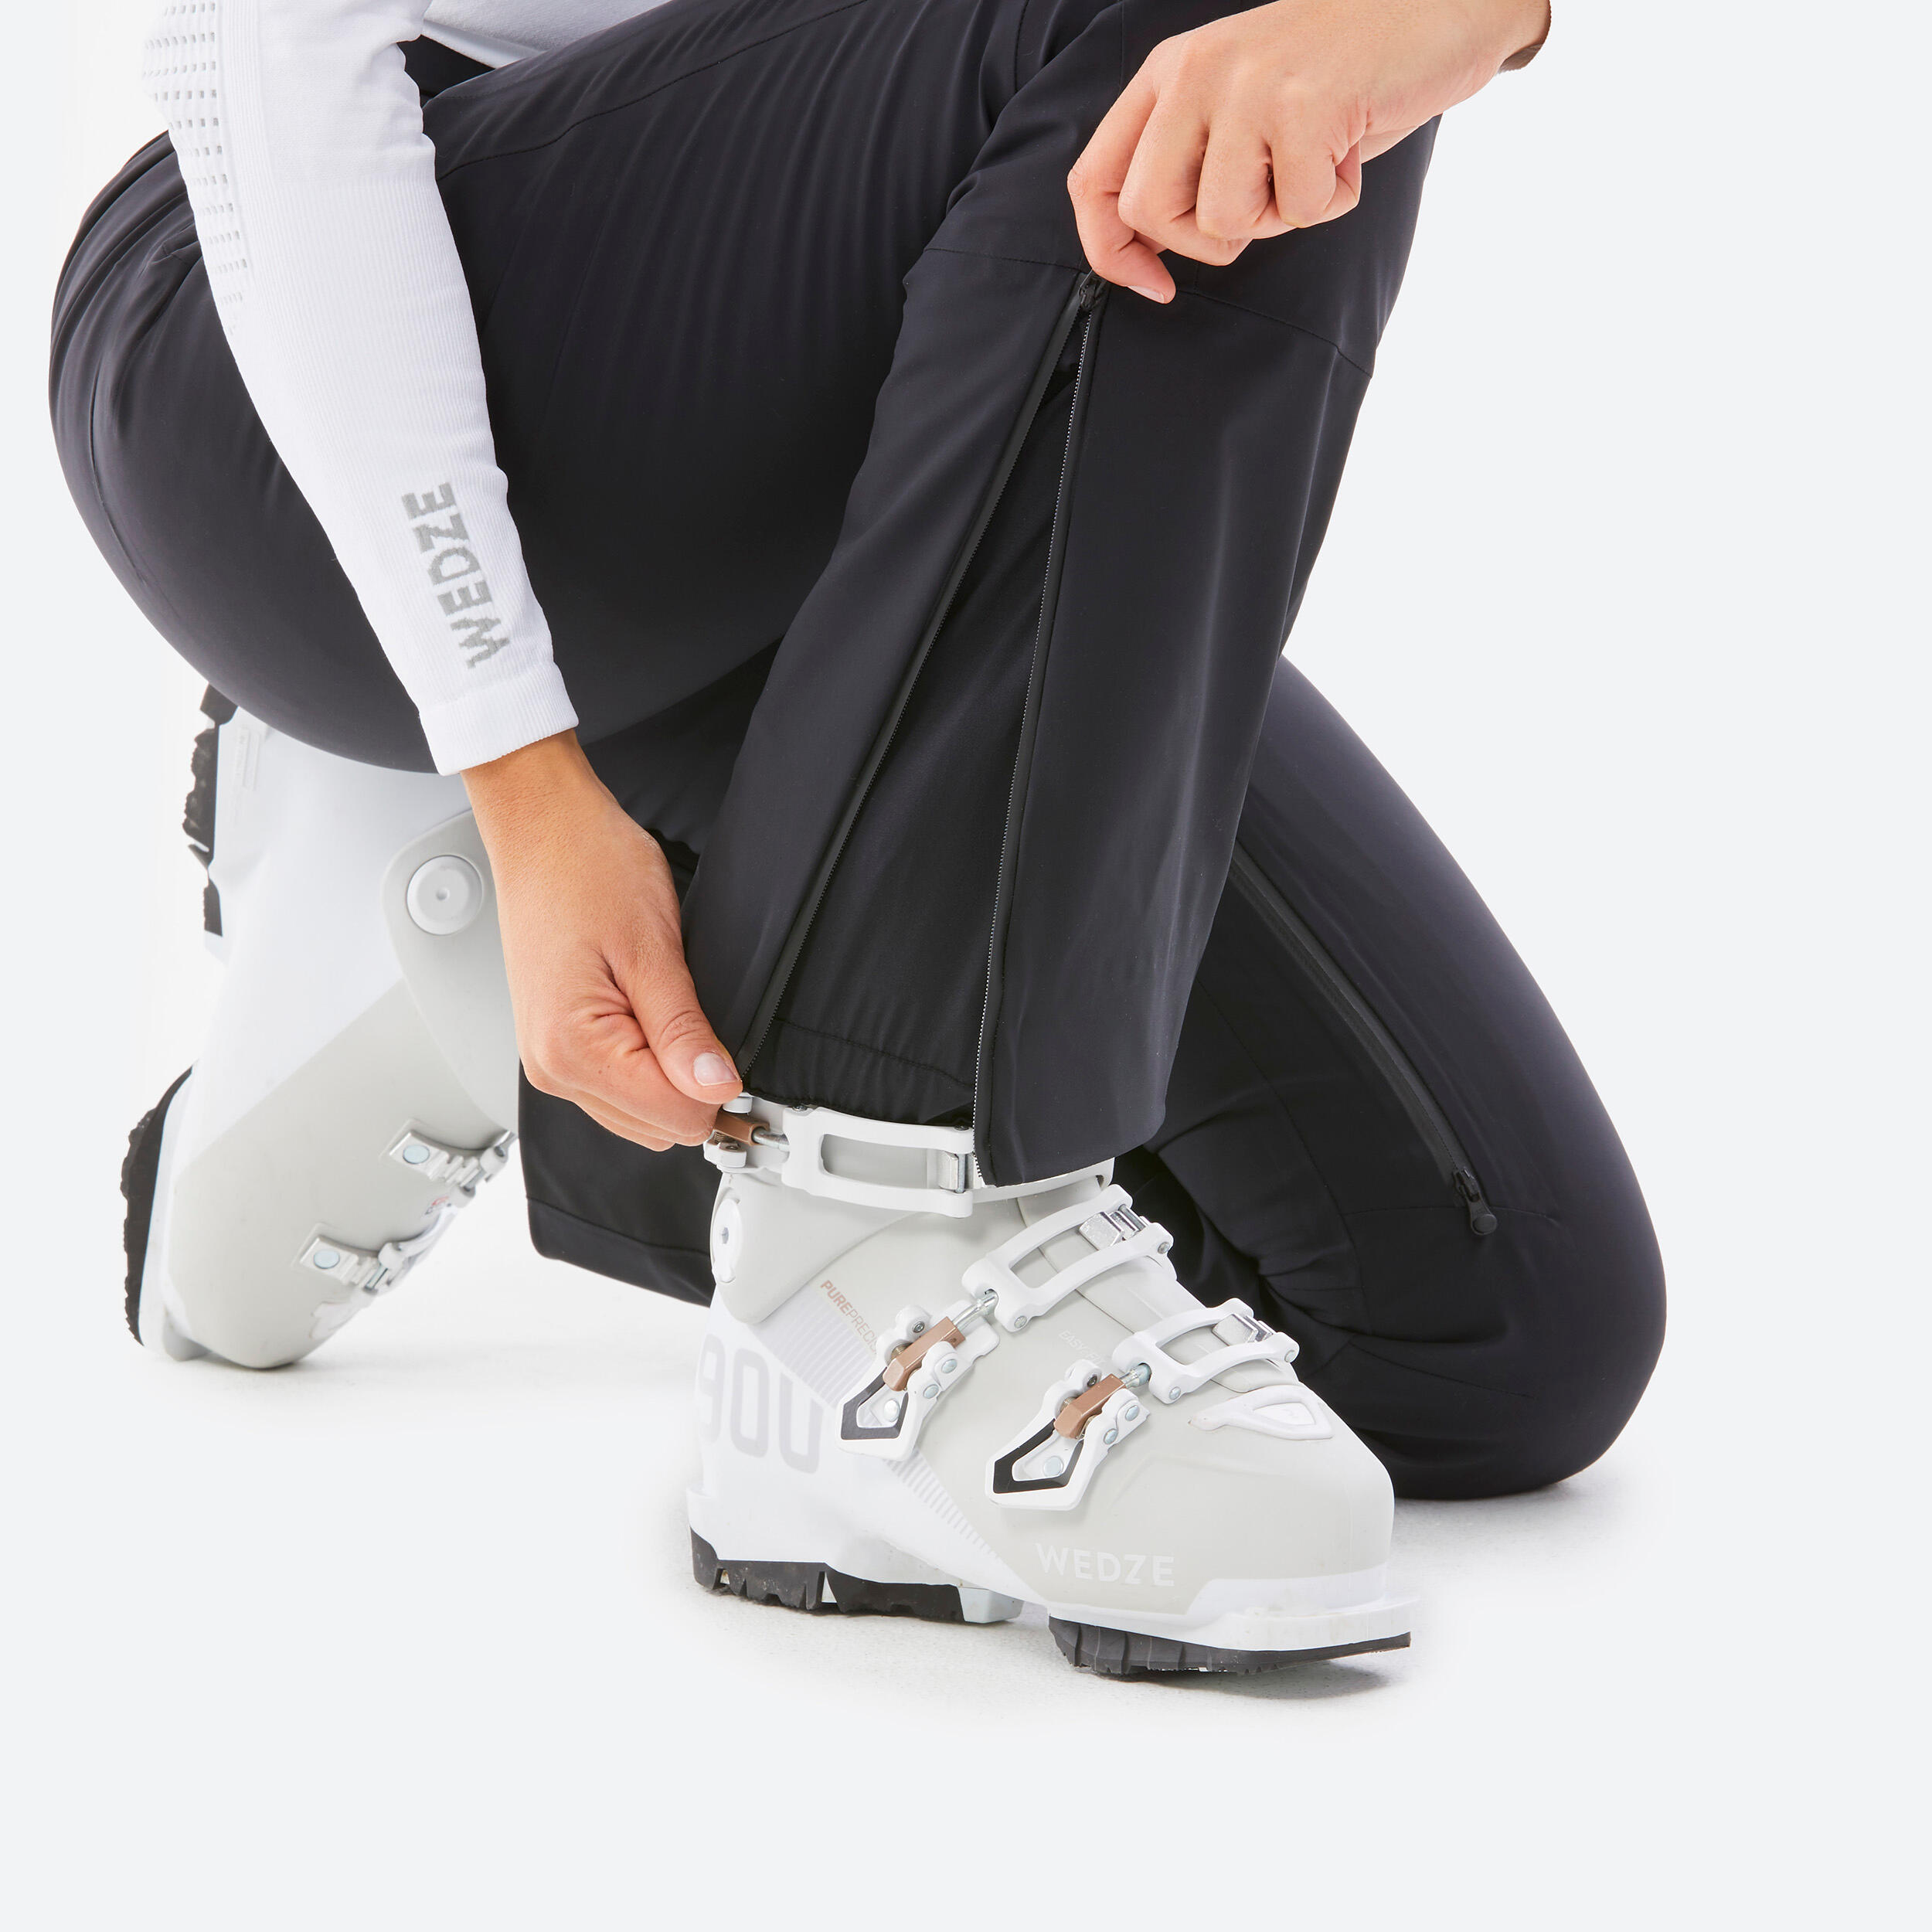 Women’s Ski Trousers 900 - Khaki 11/15